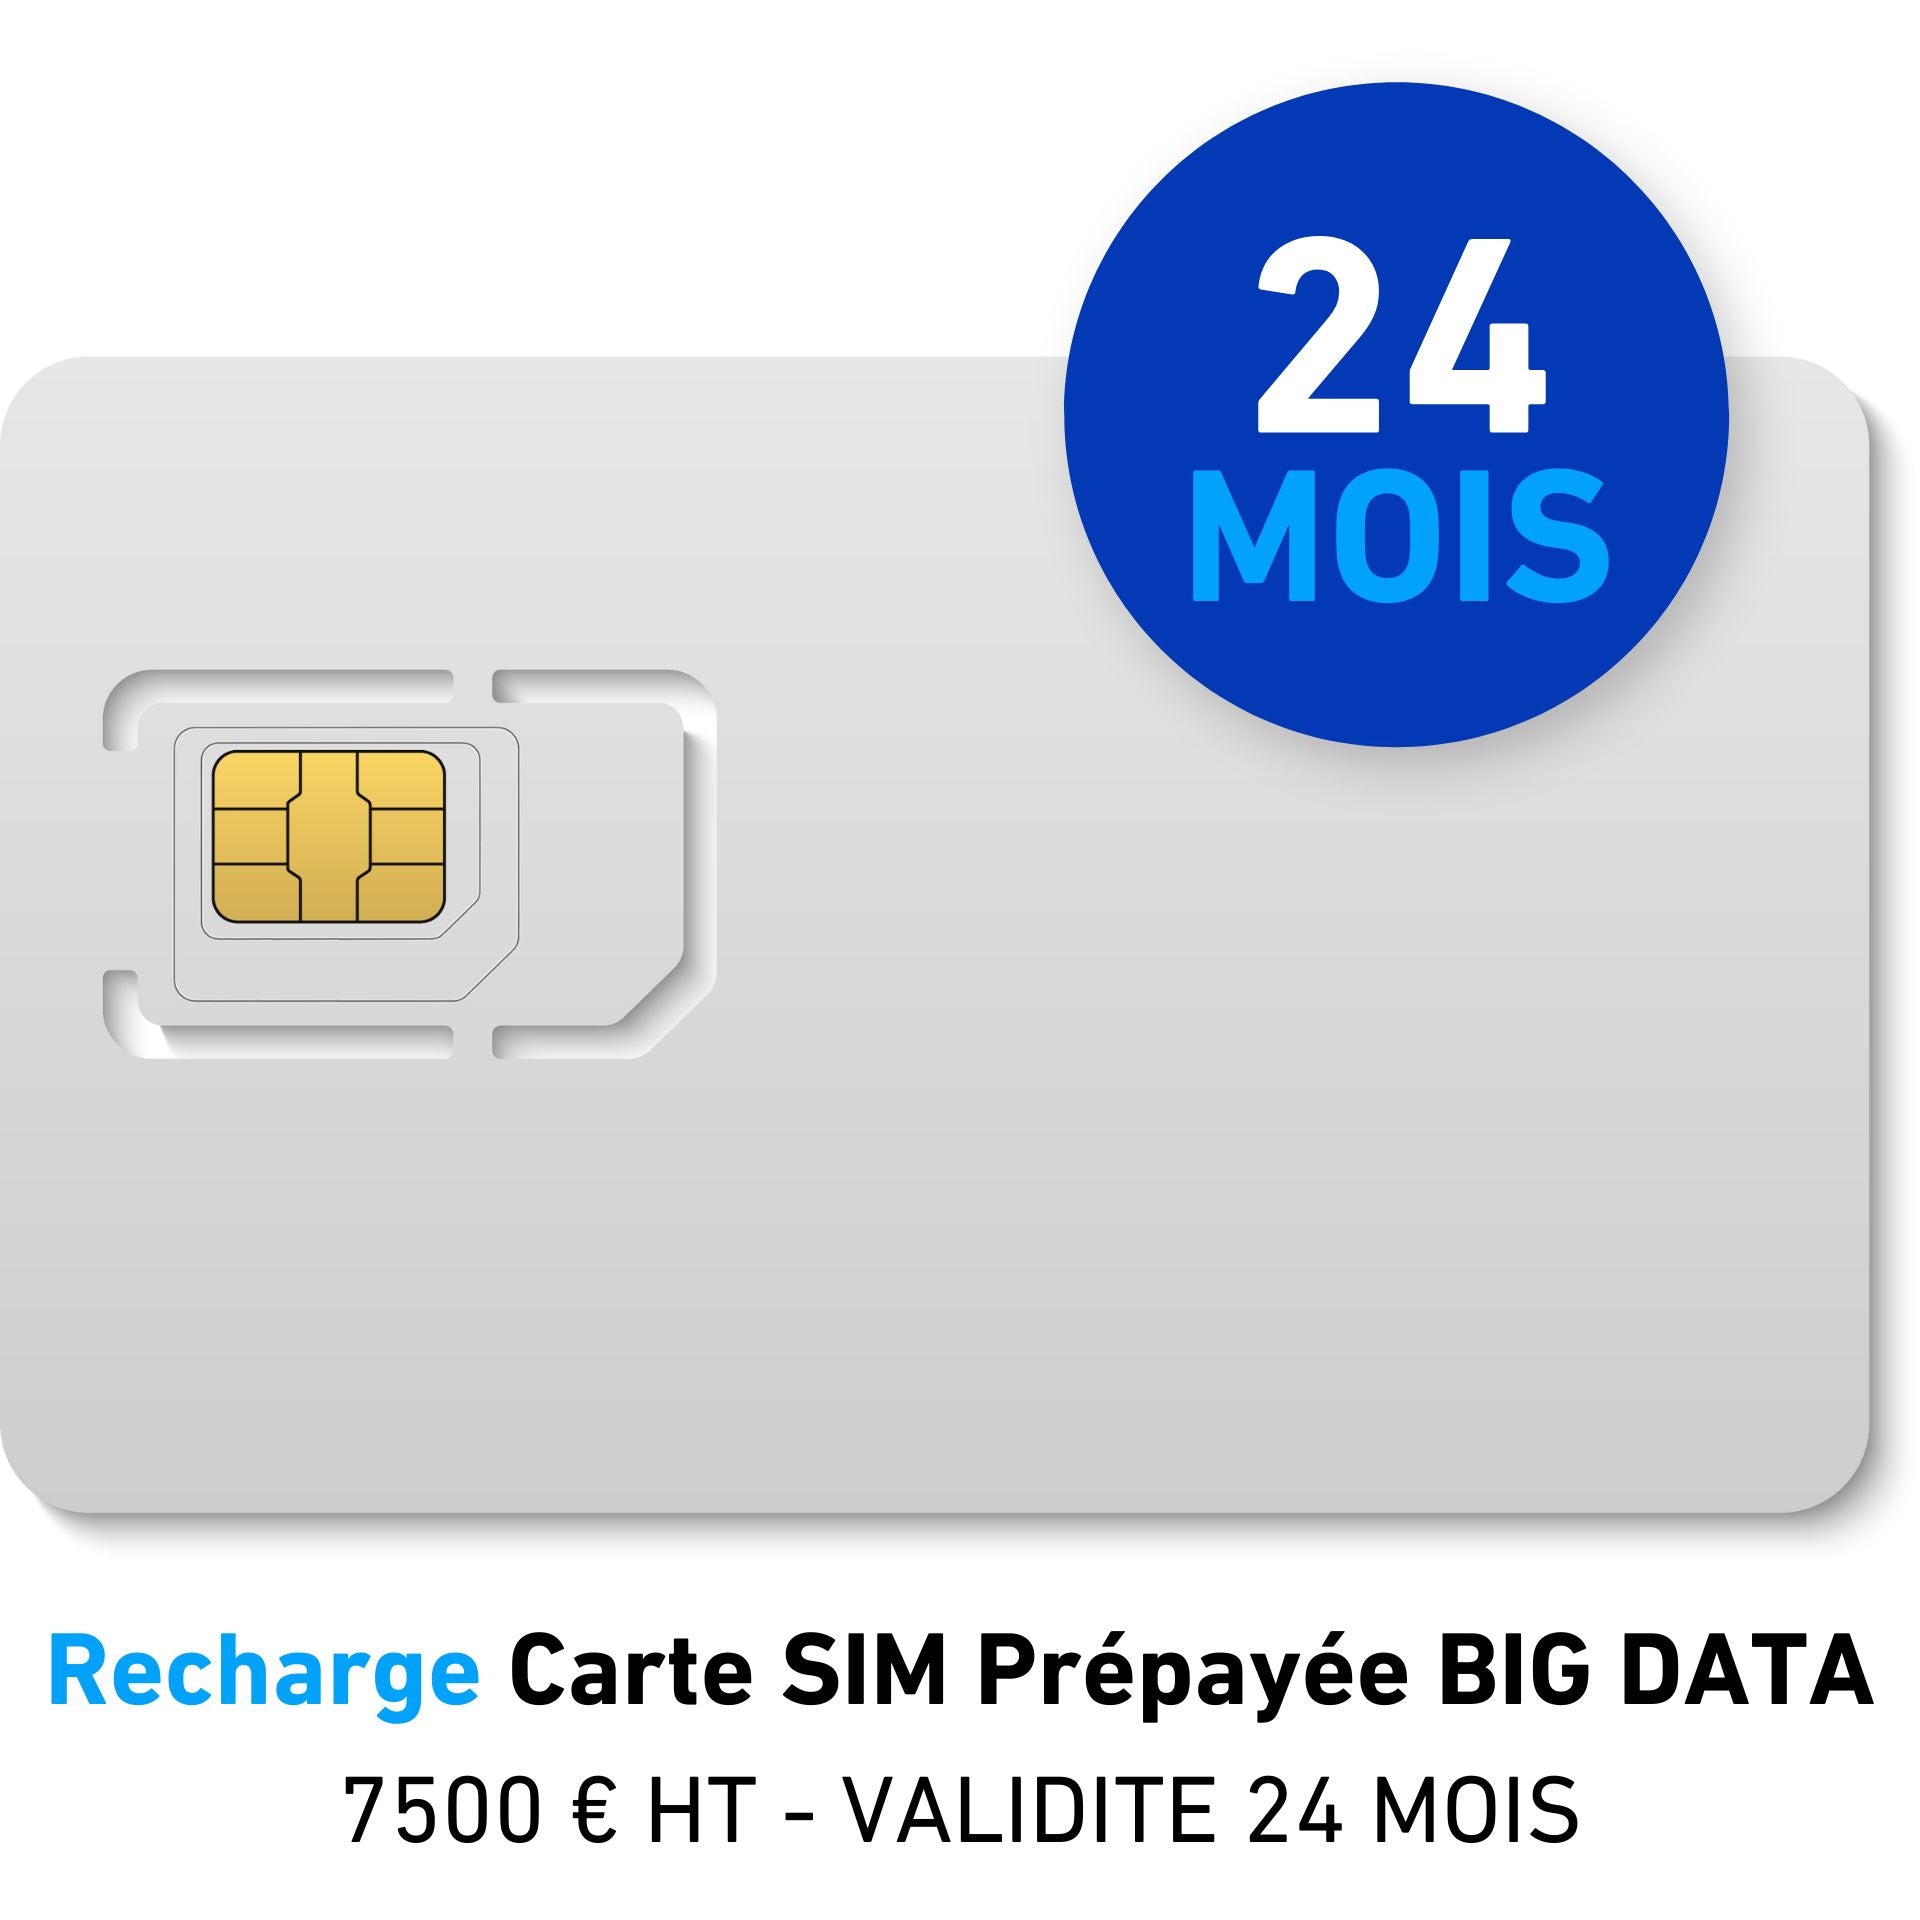 BIG DATA prepaid SIM card refill 7500 € HT - VALIDITY 24 MONTHS